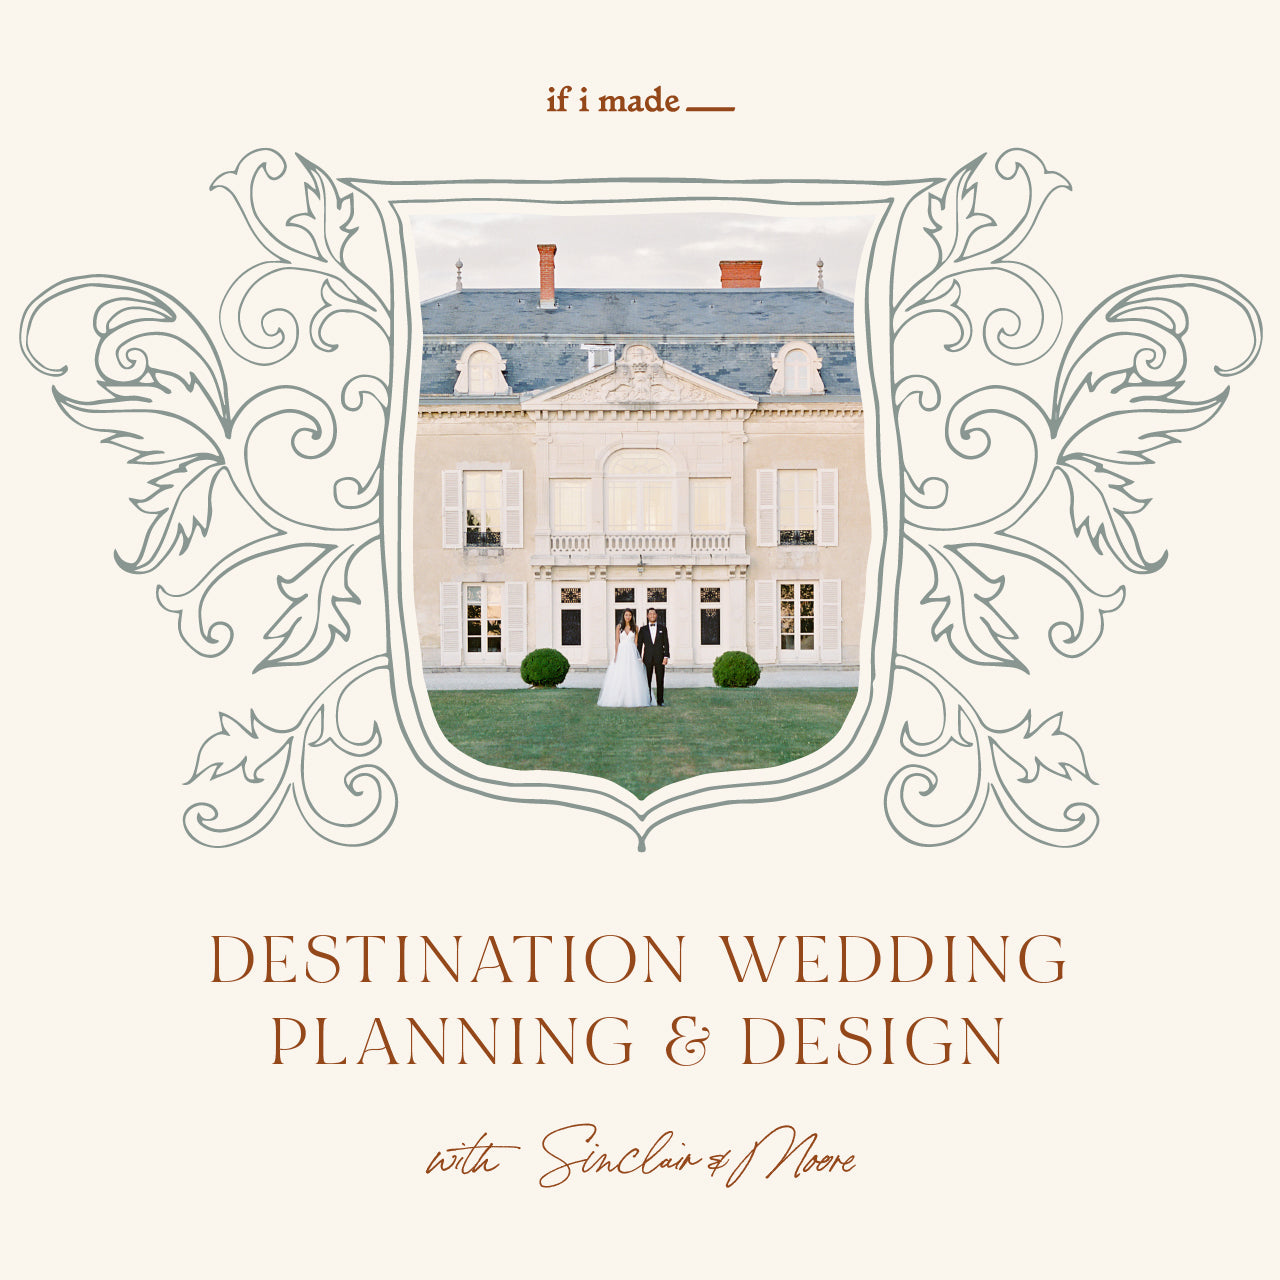 Destination Wedding Planning & Design with Sinclair & Moore (SOP)